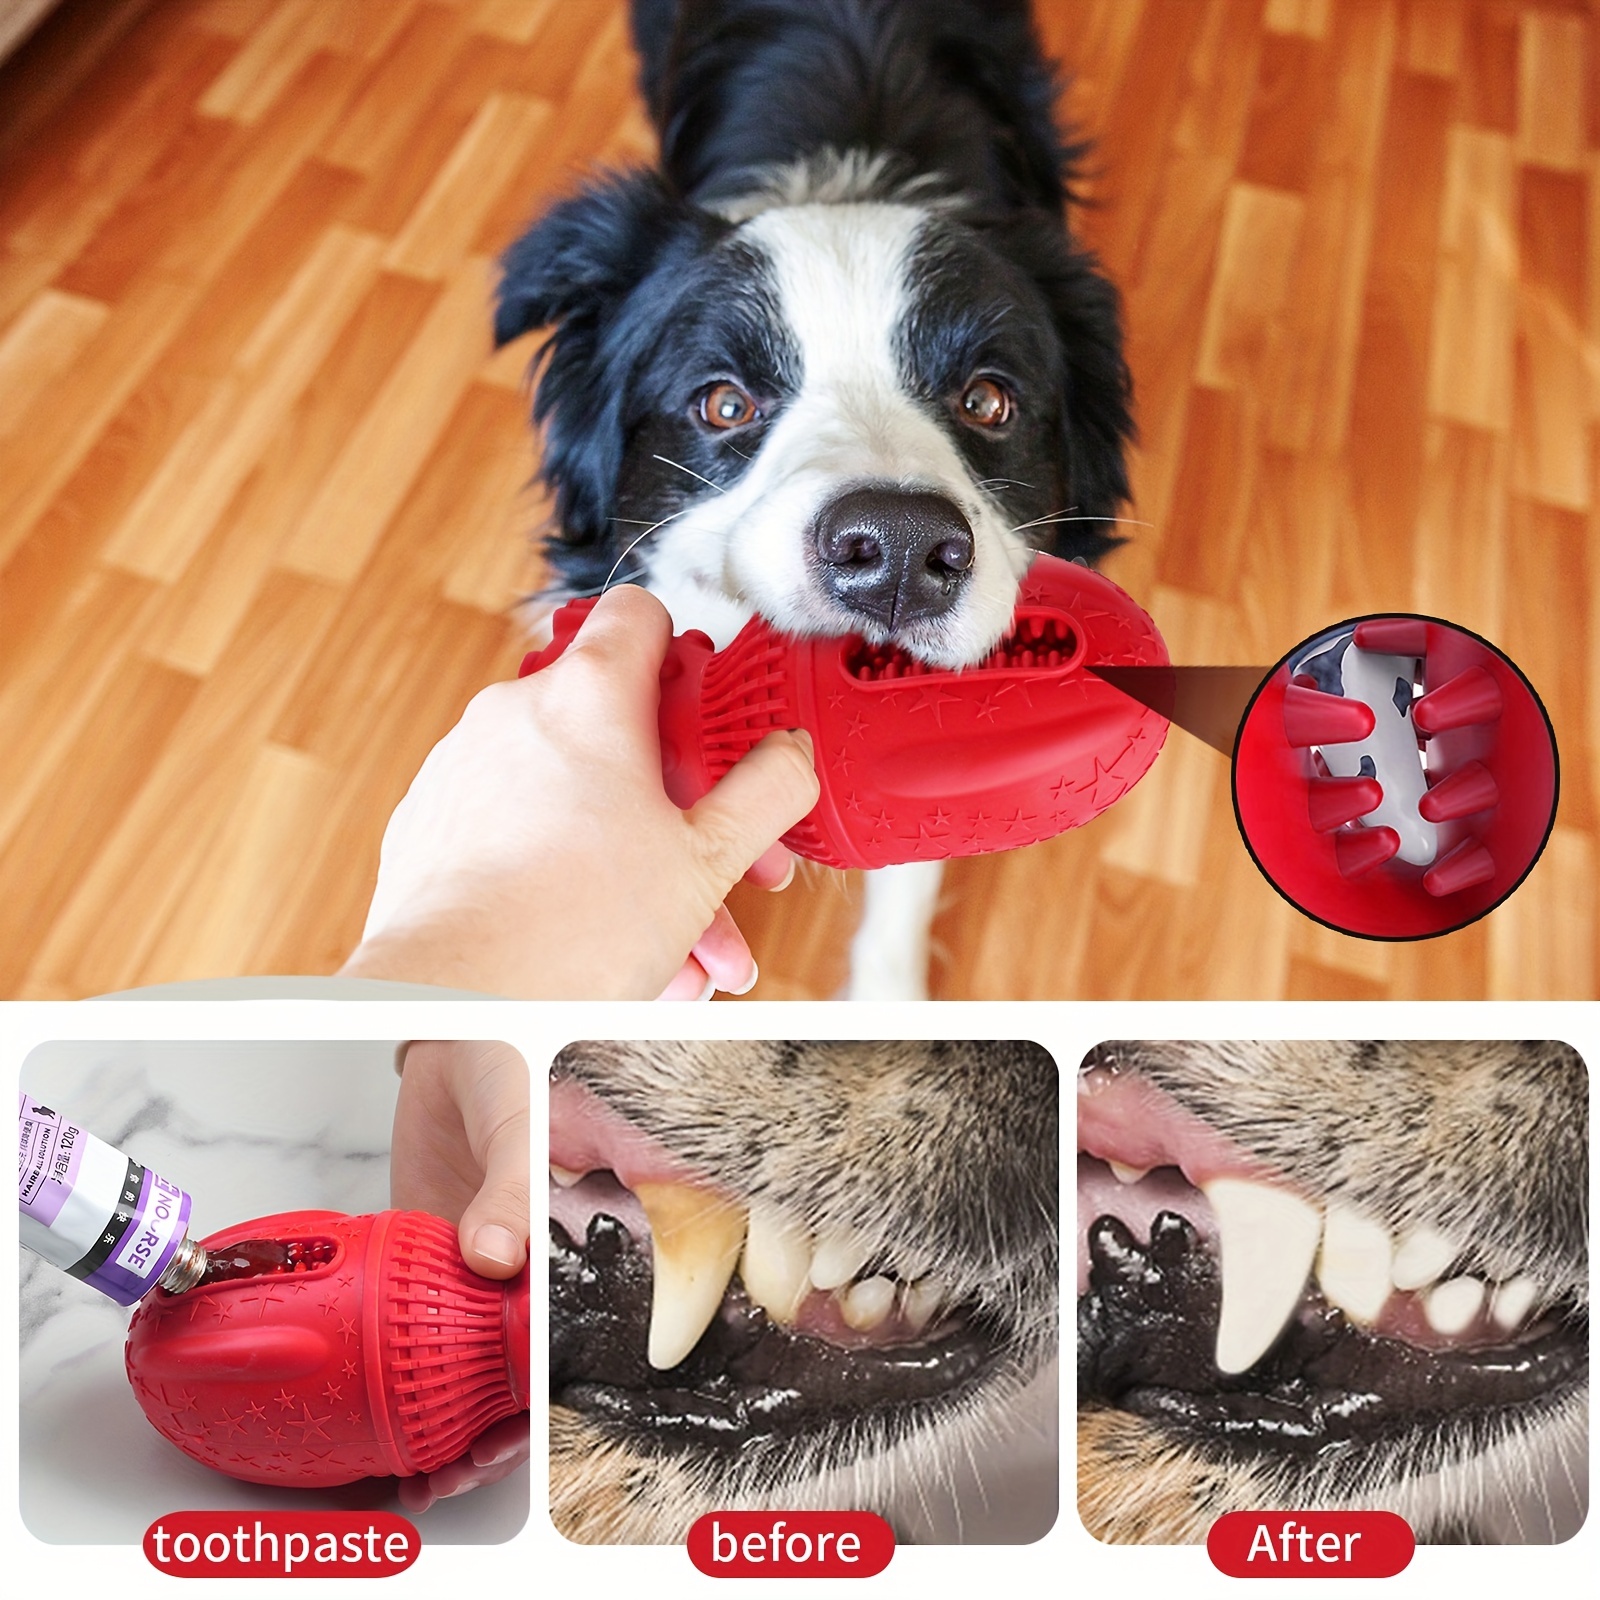 PcEoTllar Dog Toy for Aggressive Chewer Large Medium